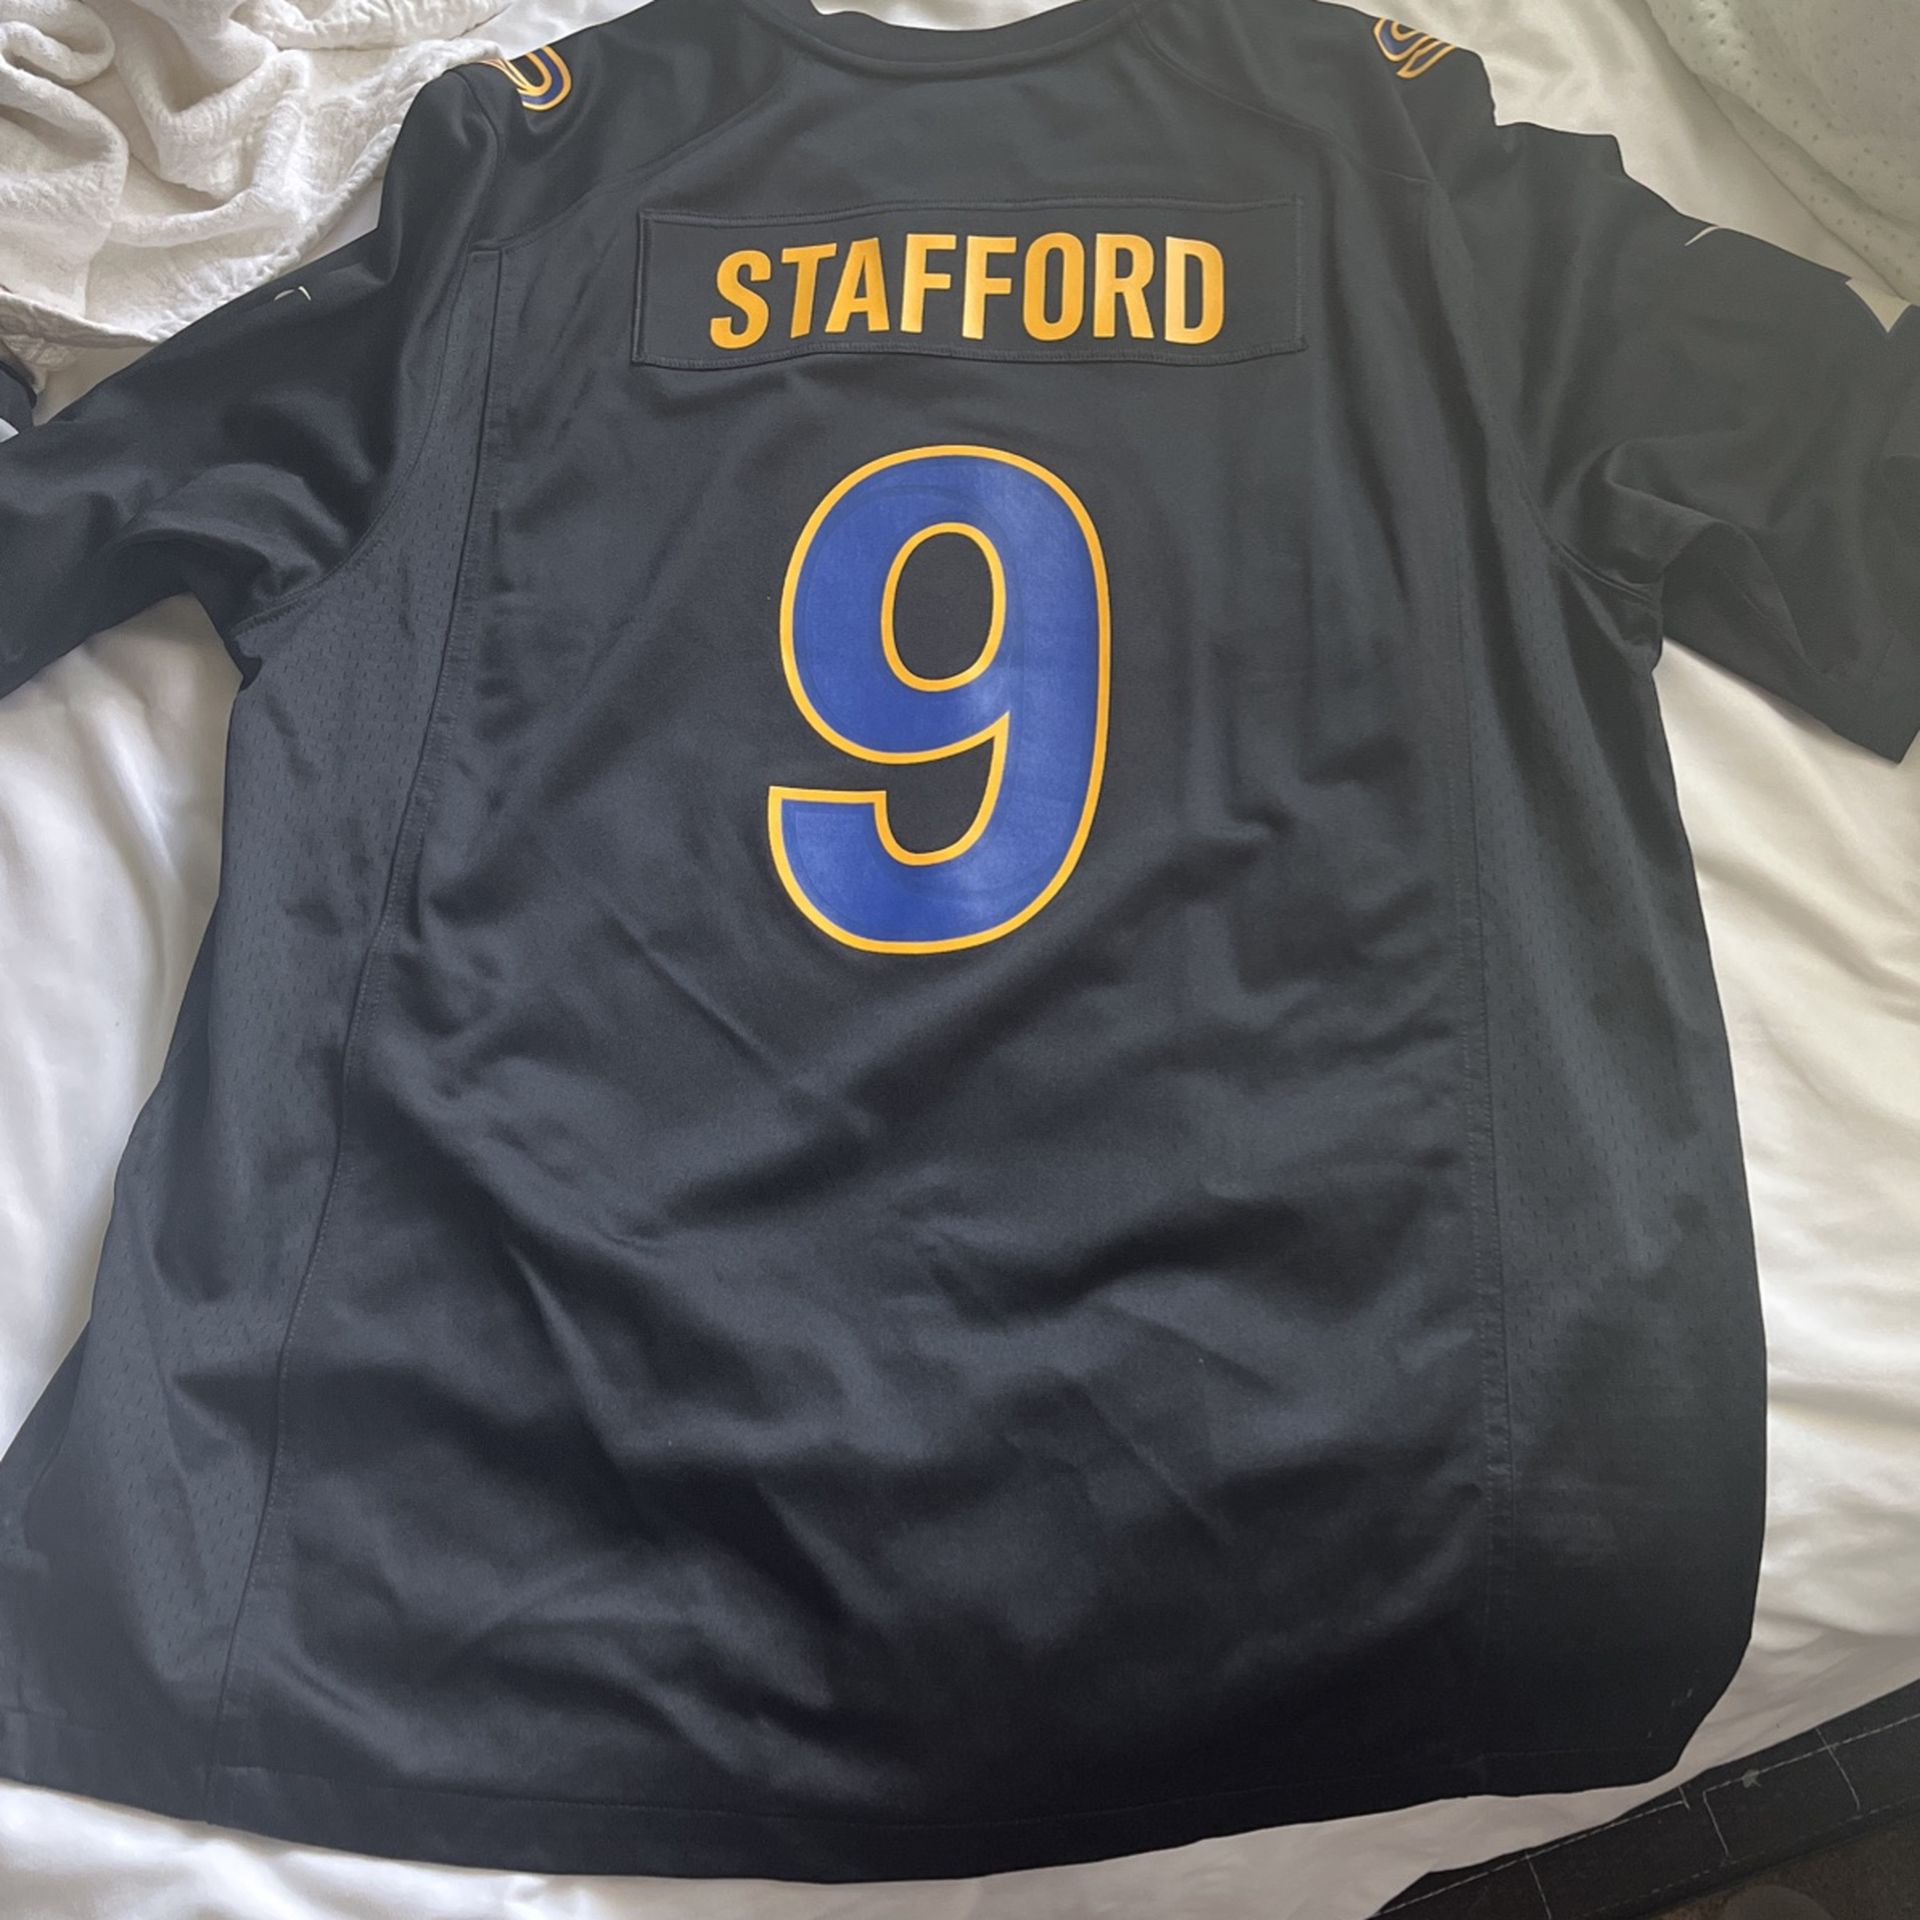 Matt Stafford Mens Xl Black Rams Jersey for Sale in La Habra